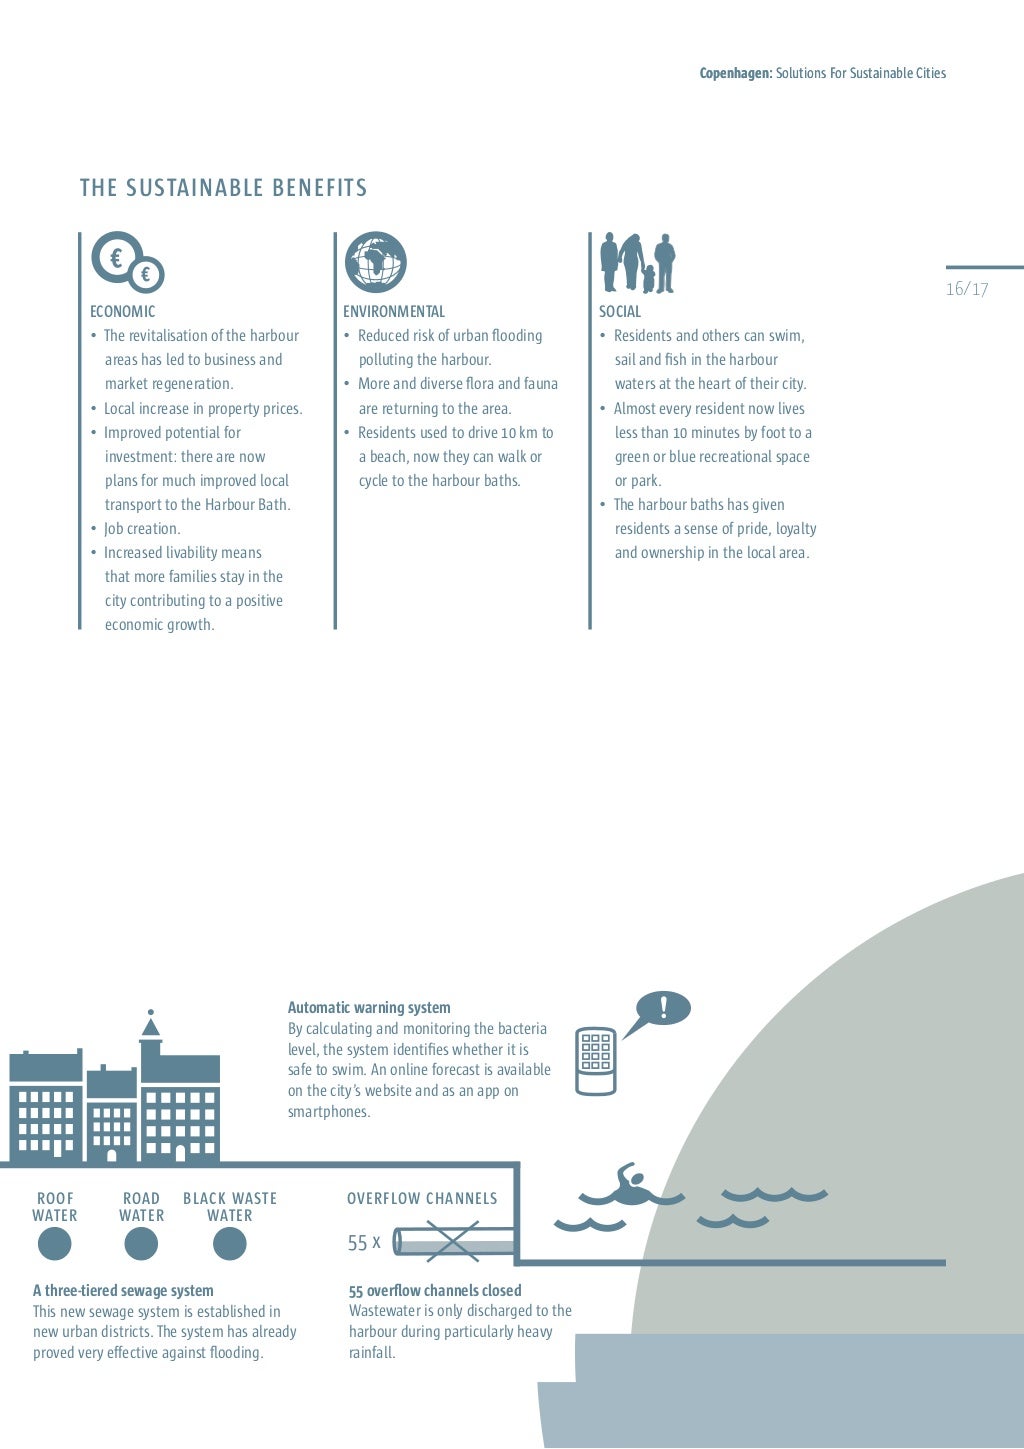 Copenhagen - Solutions For Sustainable Cities 2012 (Export Catalogue)